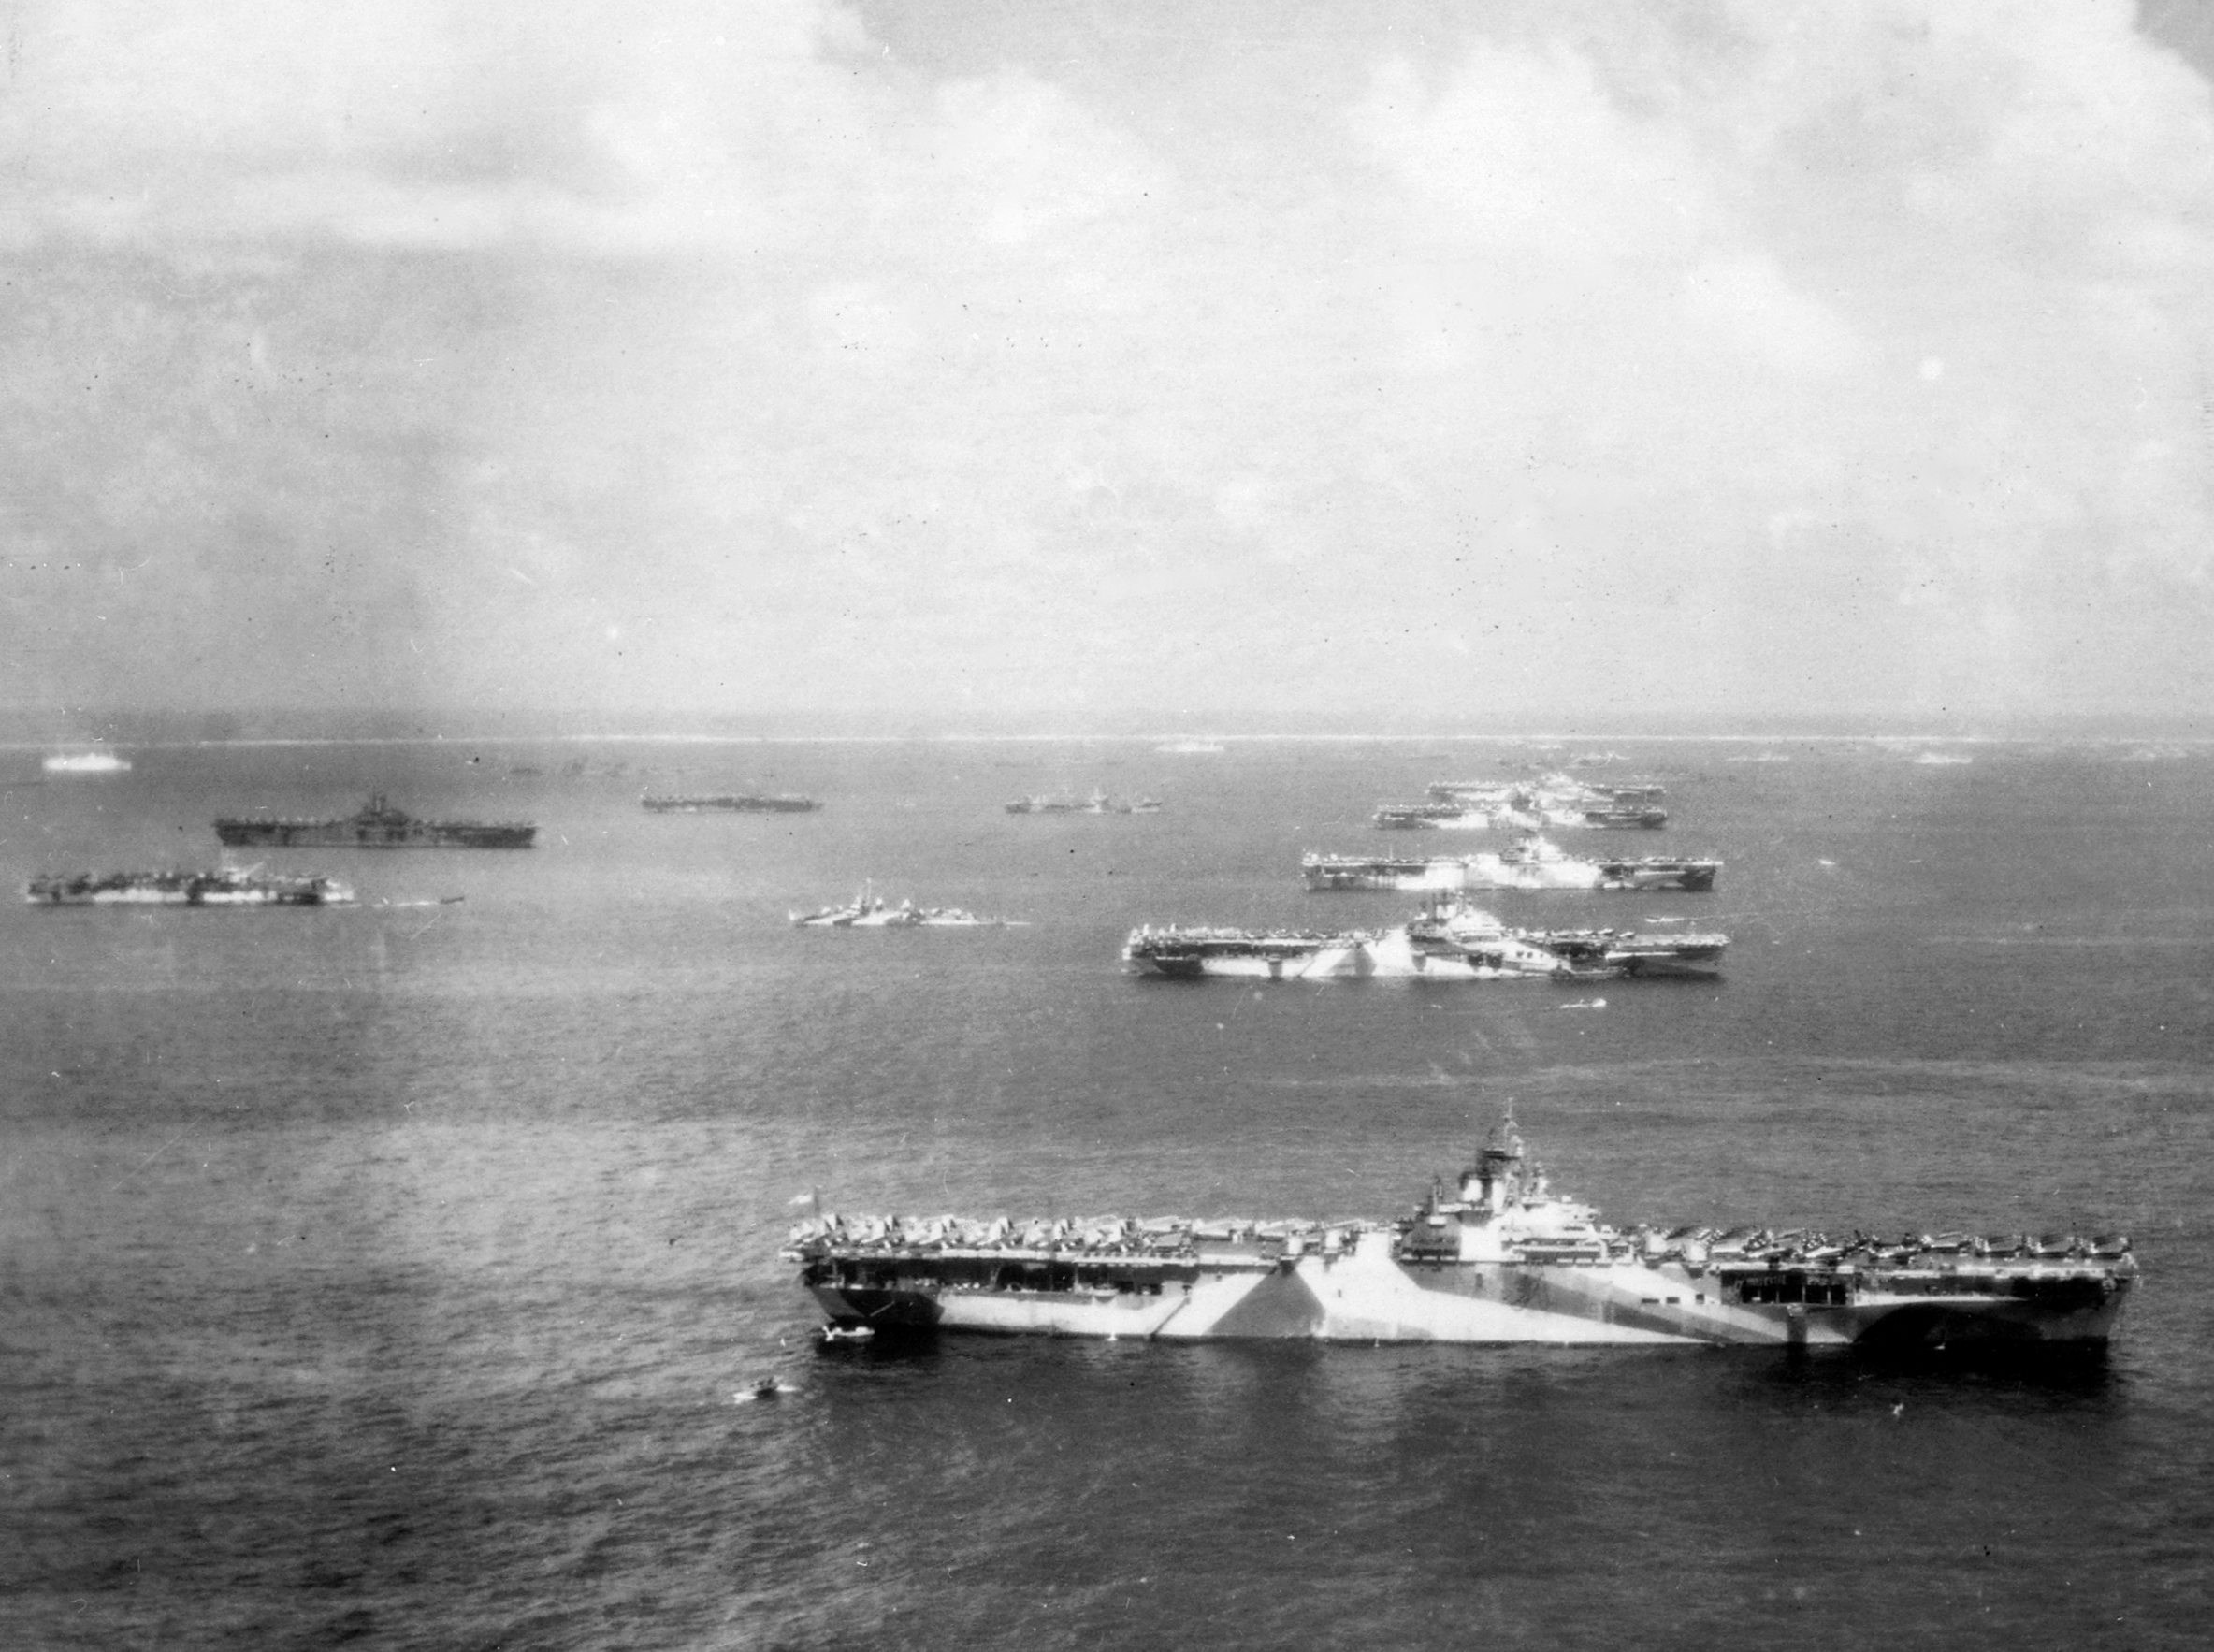 USS Wasp, USS Yorktown, USS Hornet, USS Hancock, USS Ticonderoga, and other warships at Ulithi Atoll, Caroline Islands, 8 Dec 1944, photo 1 of 3